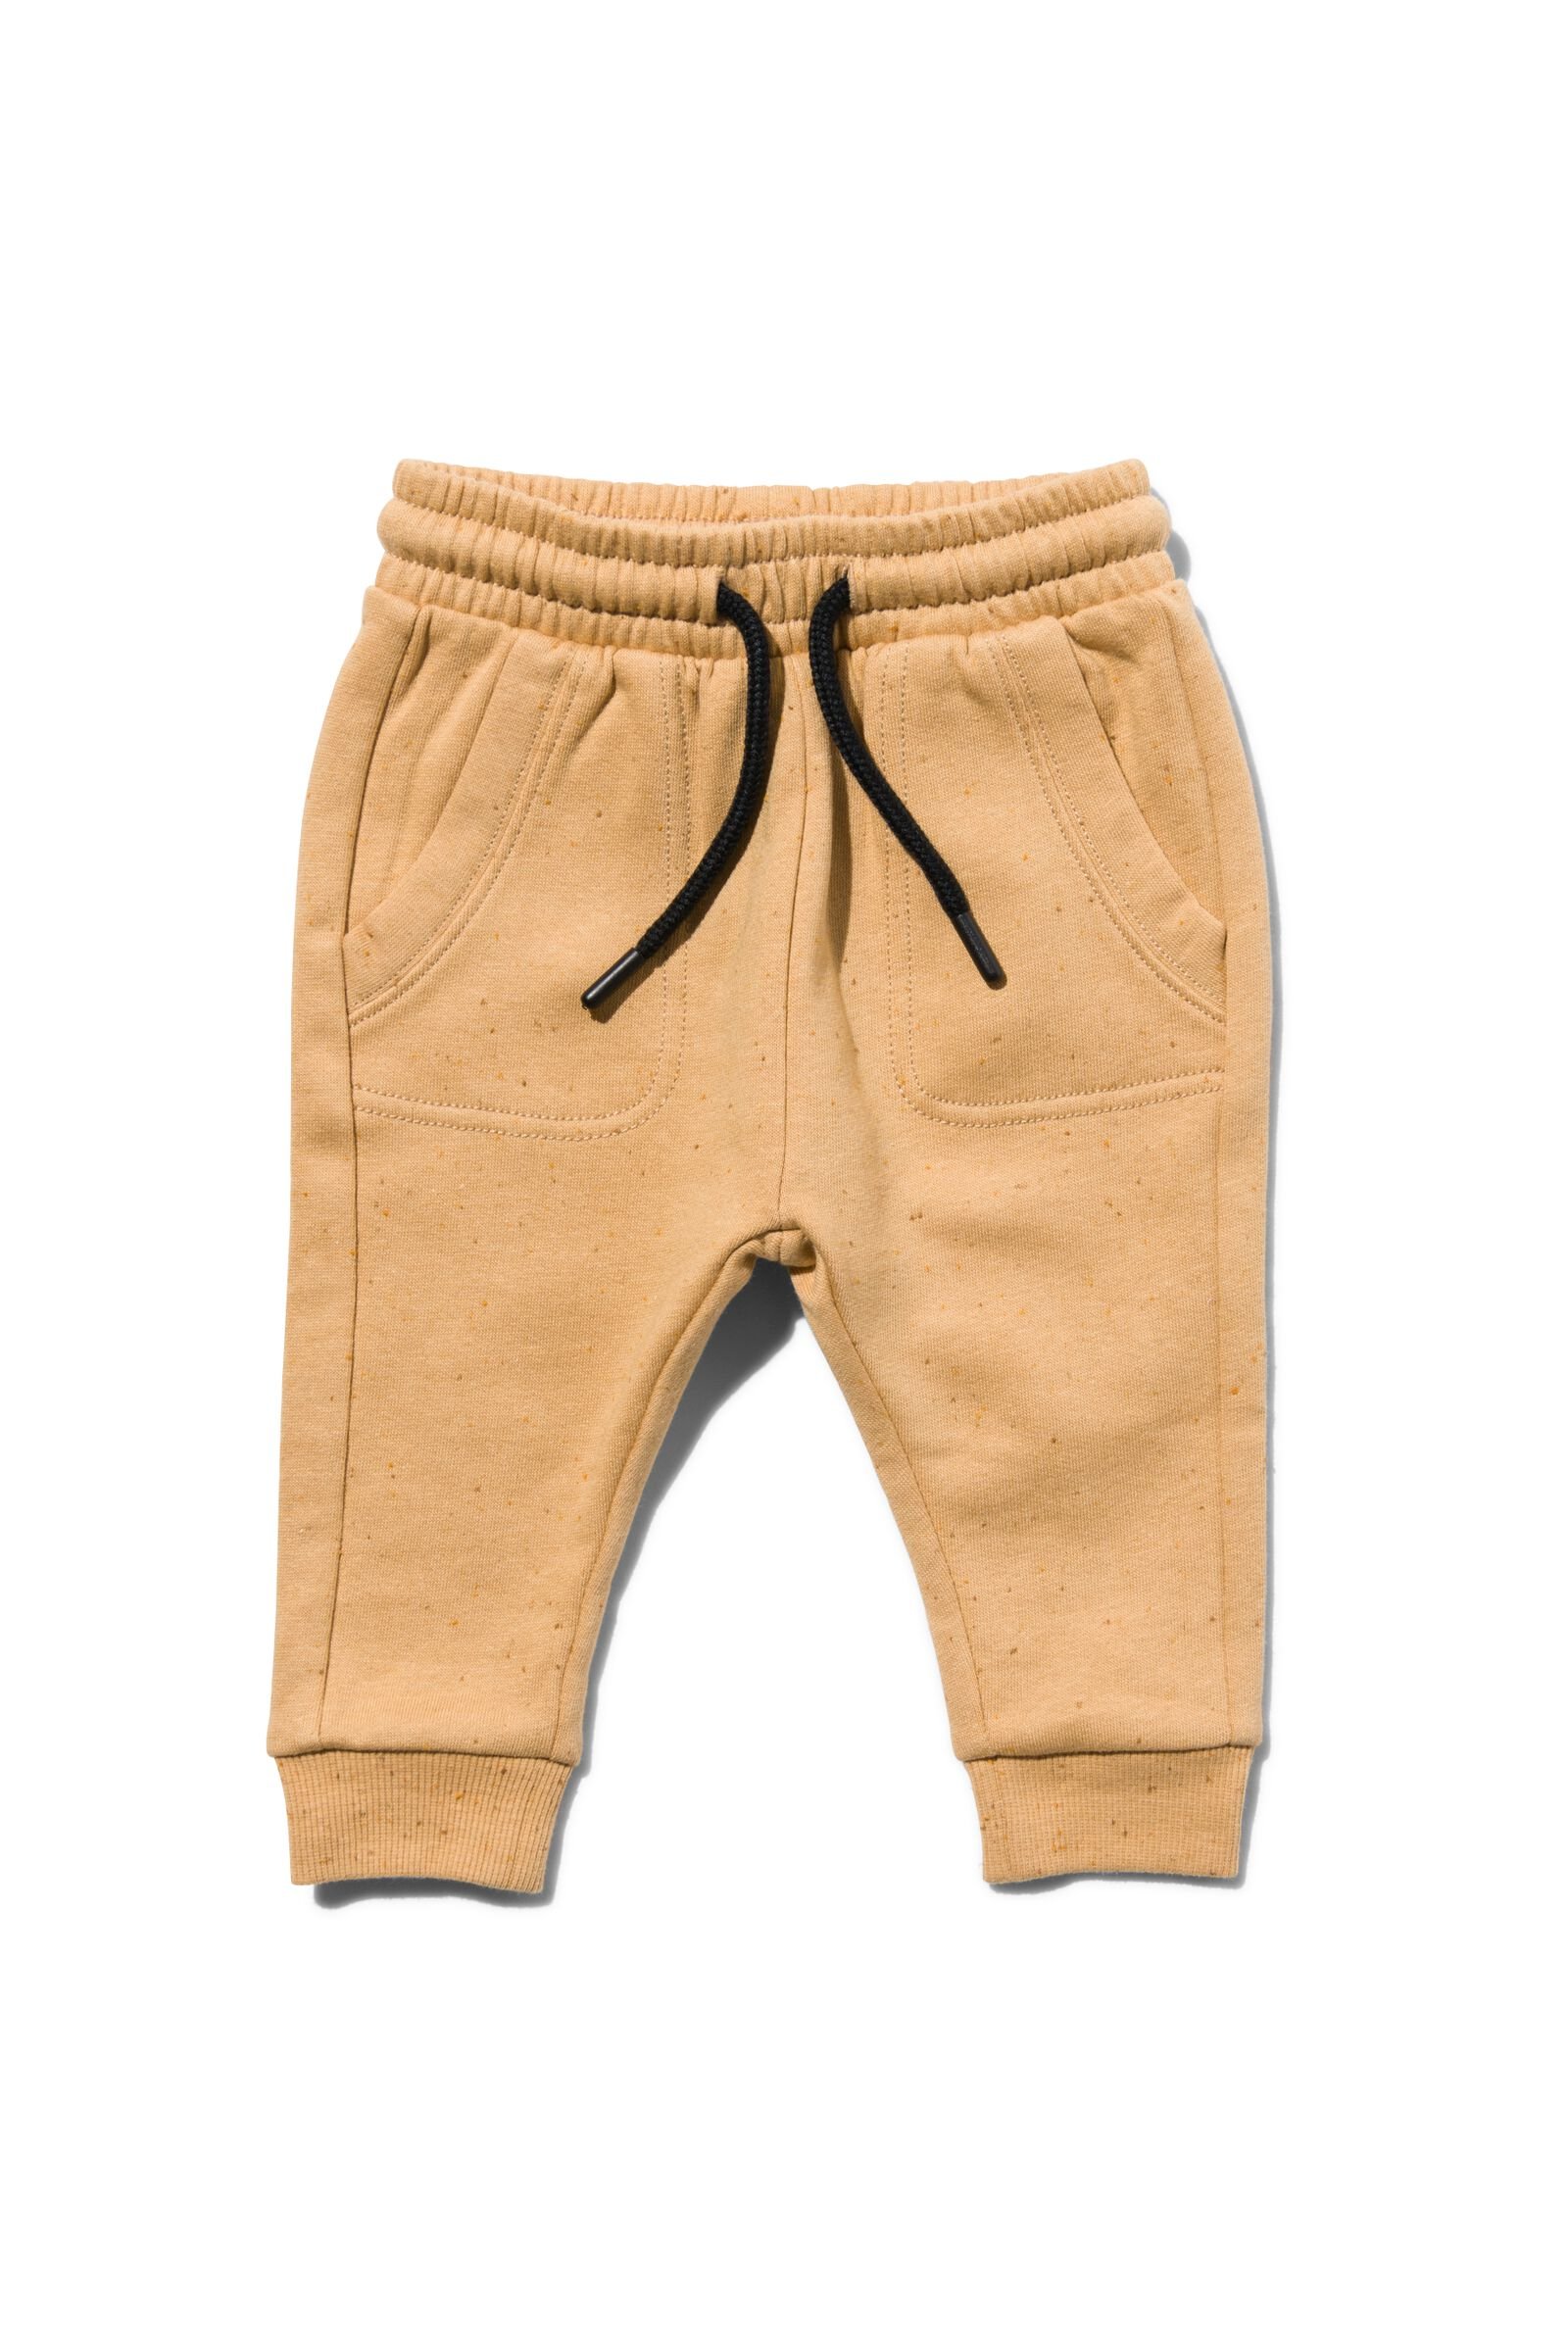 pantalon sweat bébé nappy sable 98 - 33166547 - HEMA